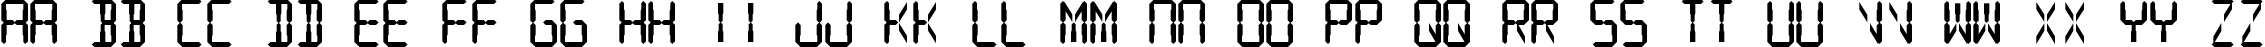 Пример написания английского алфавита шрифтом Digital Readout Thick Upright